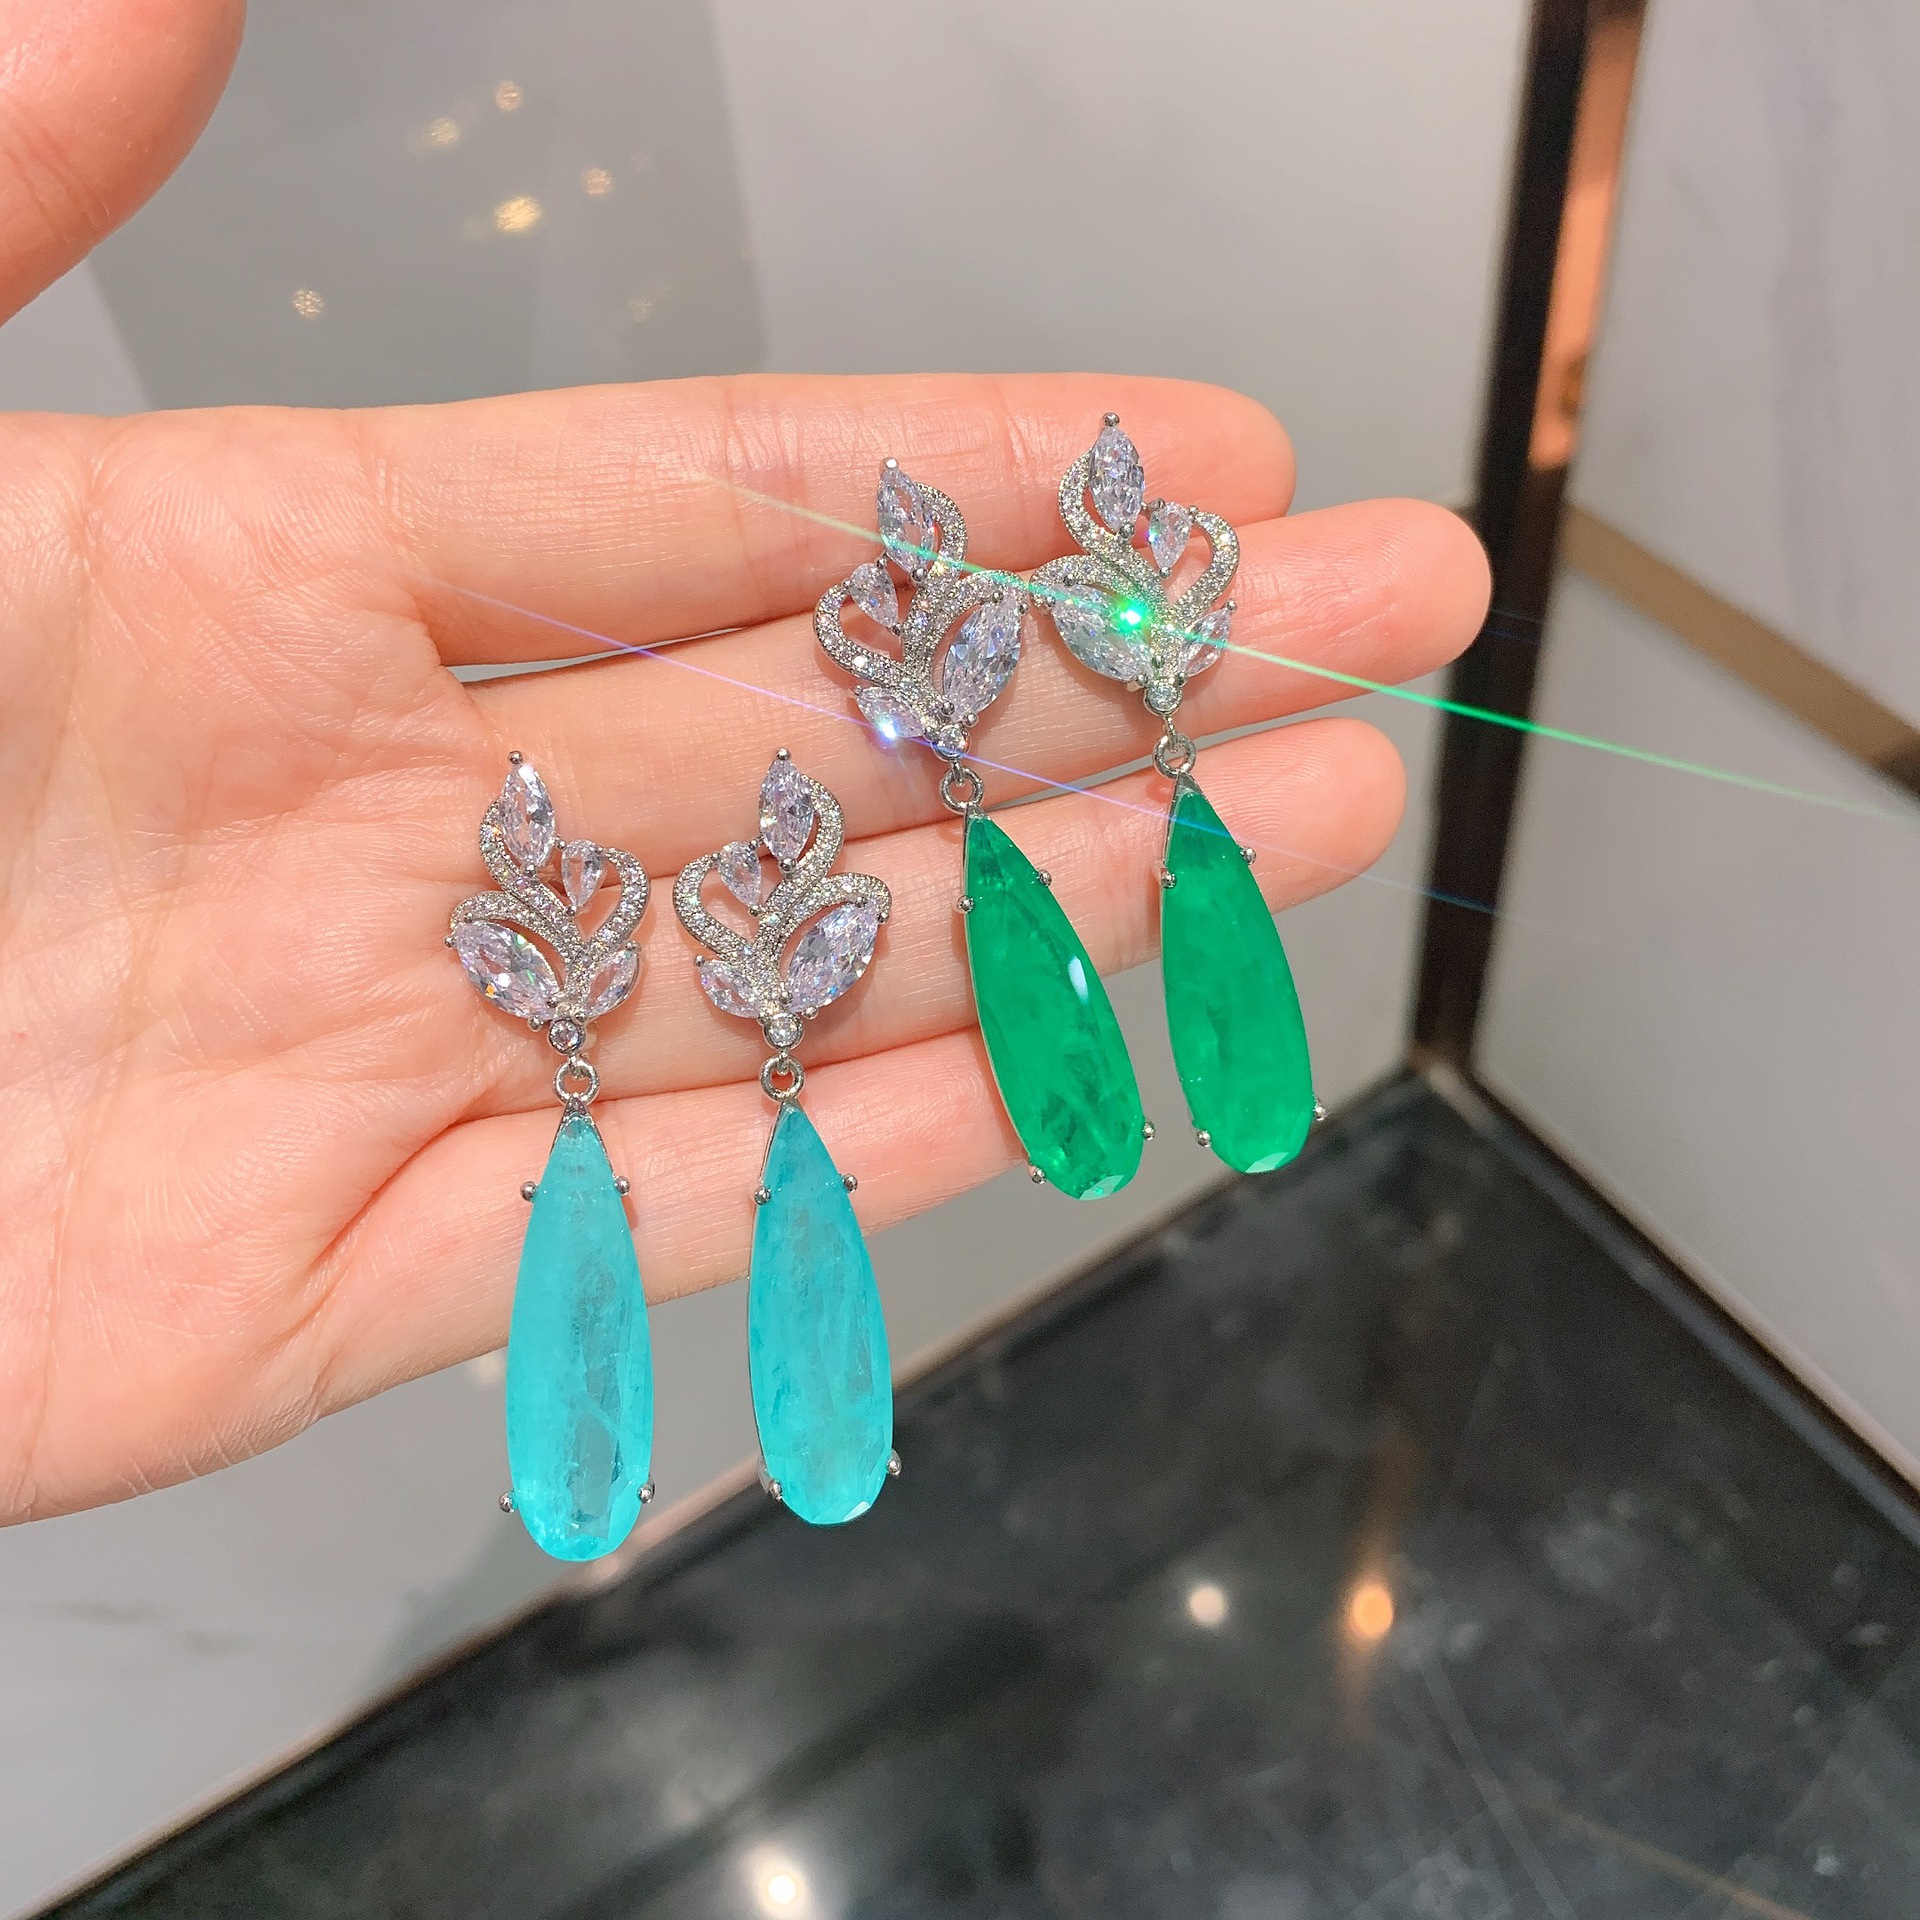 Paraiba-Stone-Water-Droplets-Green-Crystal-Earrings-Pendant-Crown-Butterfly-Women-Jewelry-Wedding-Party-Gift-Luxurious.jpg